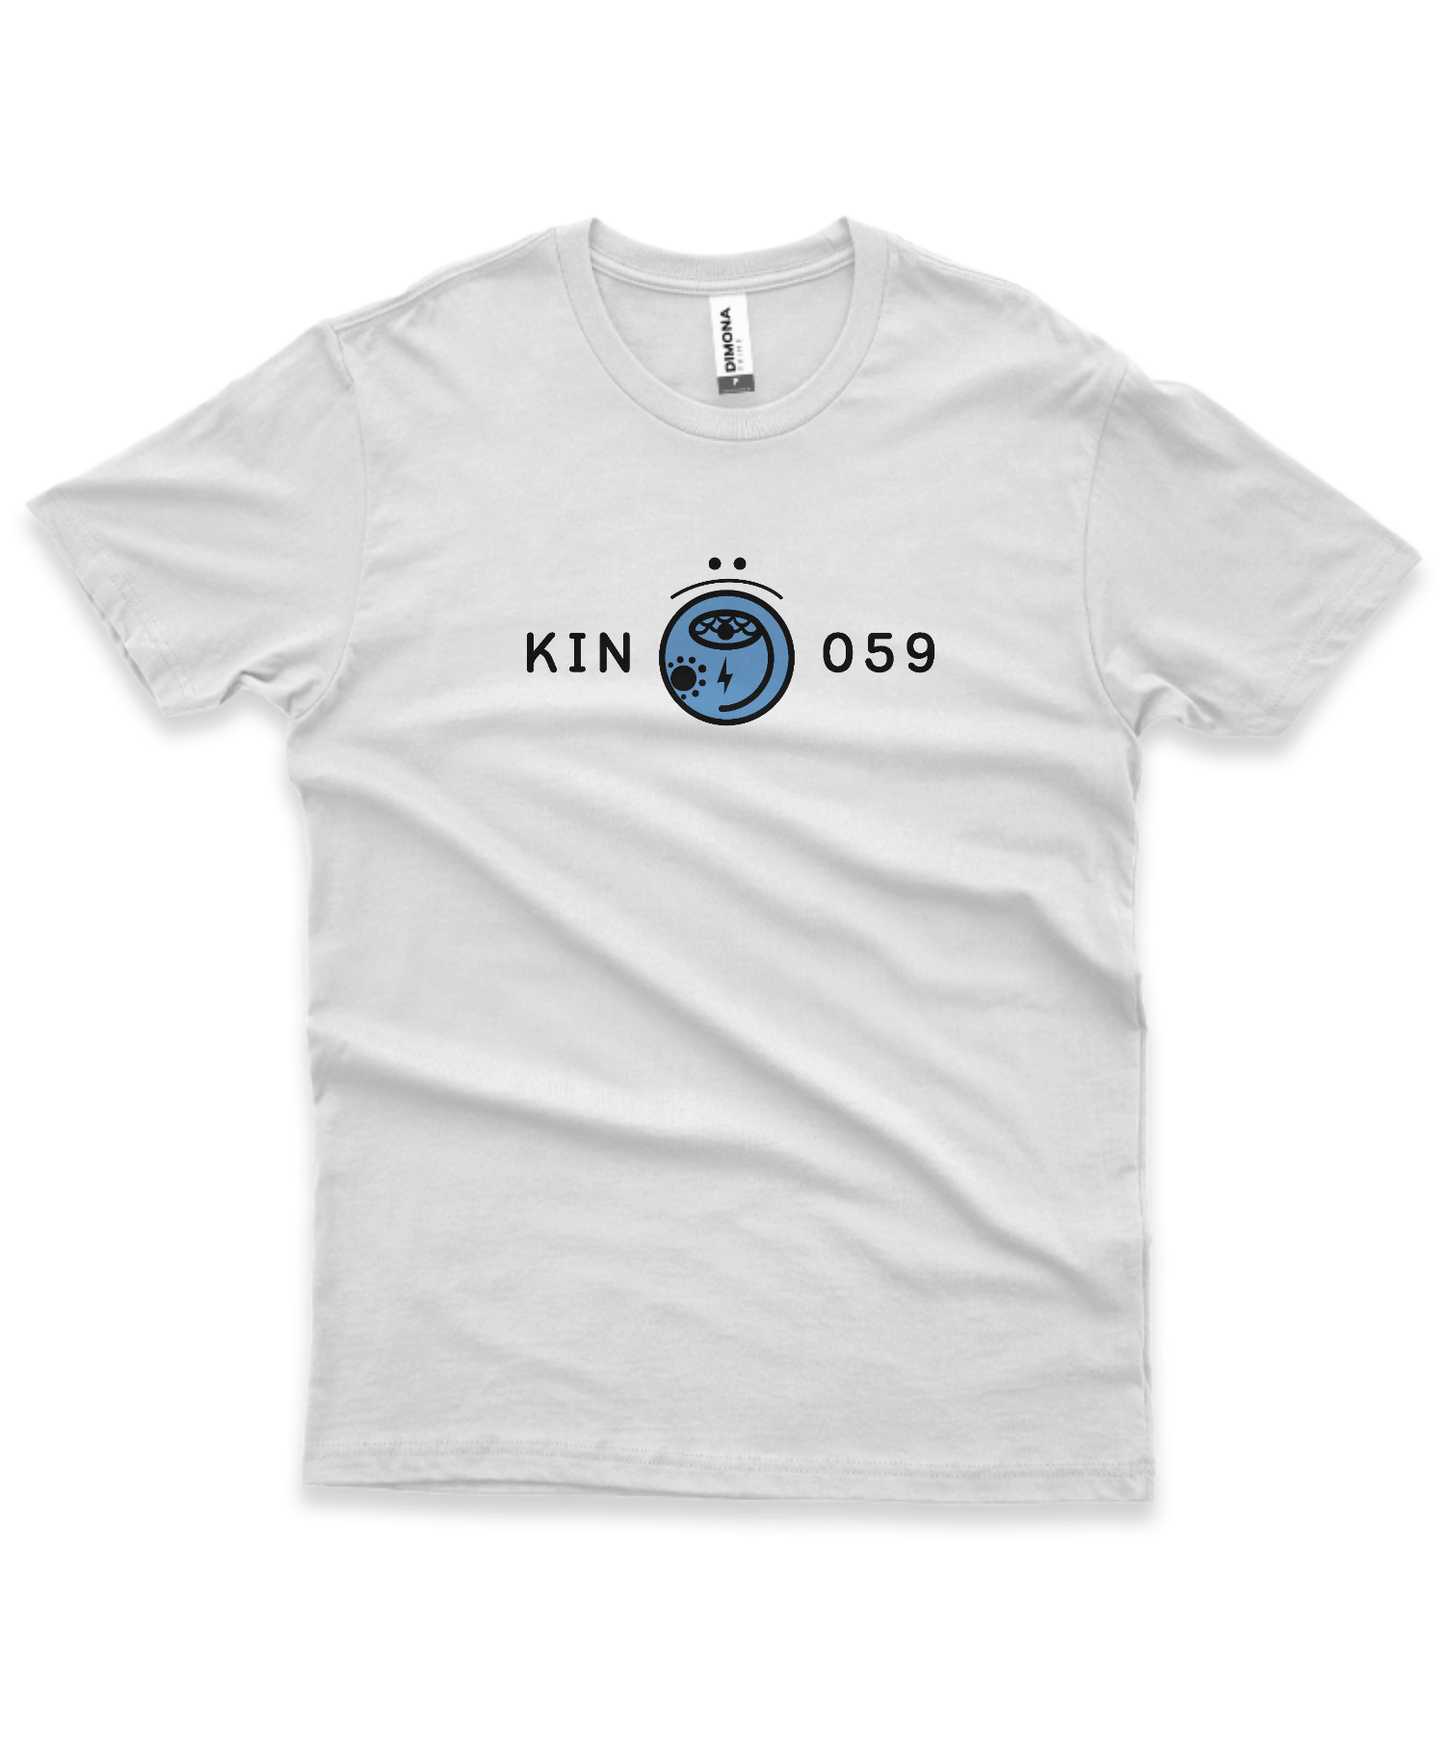 Camiseta Branca Kin 059 - Tormenta Ressonante Azul